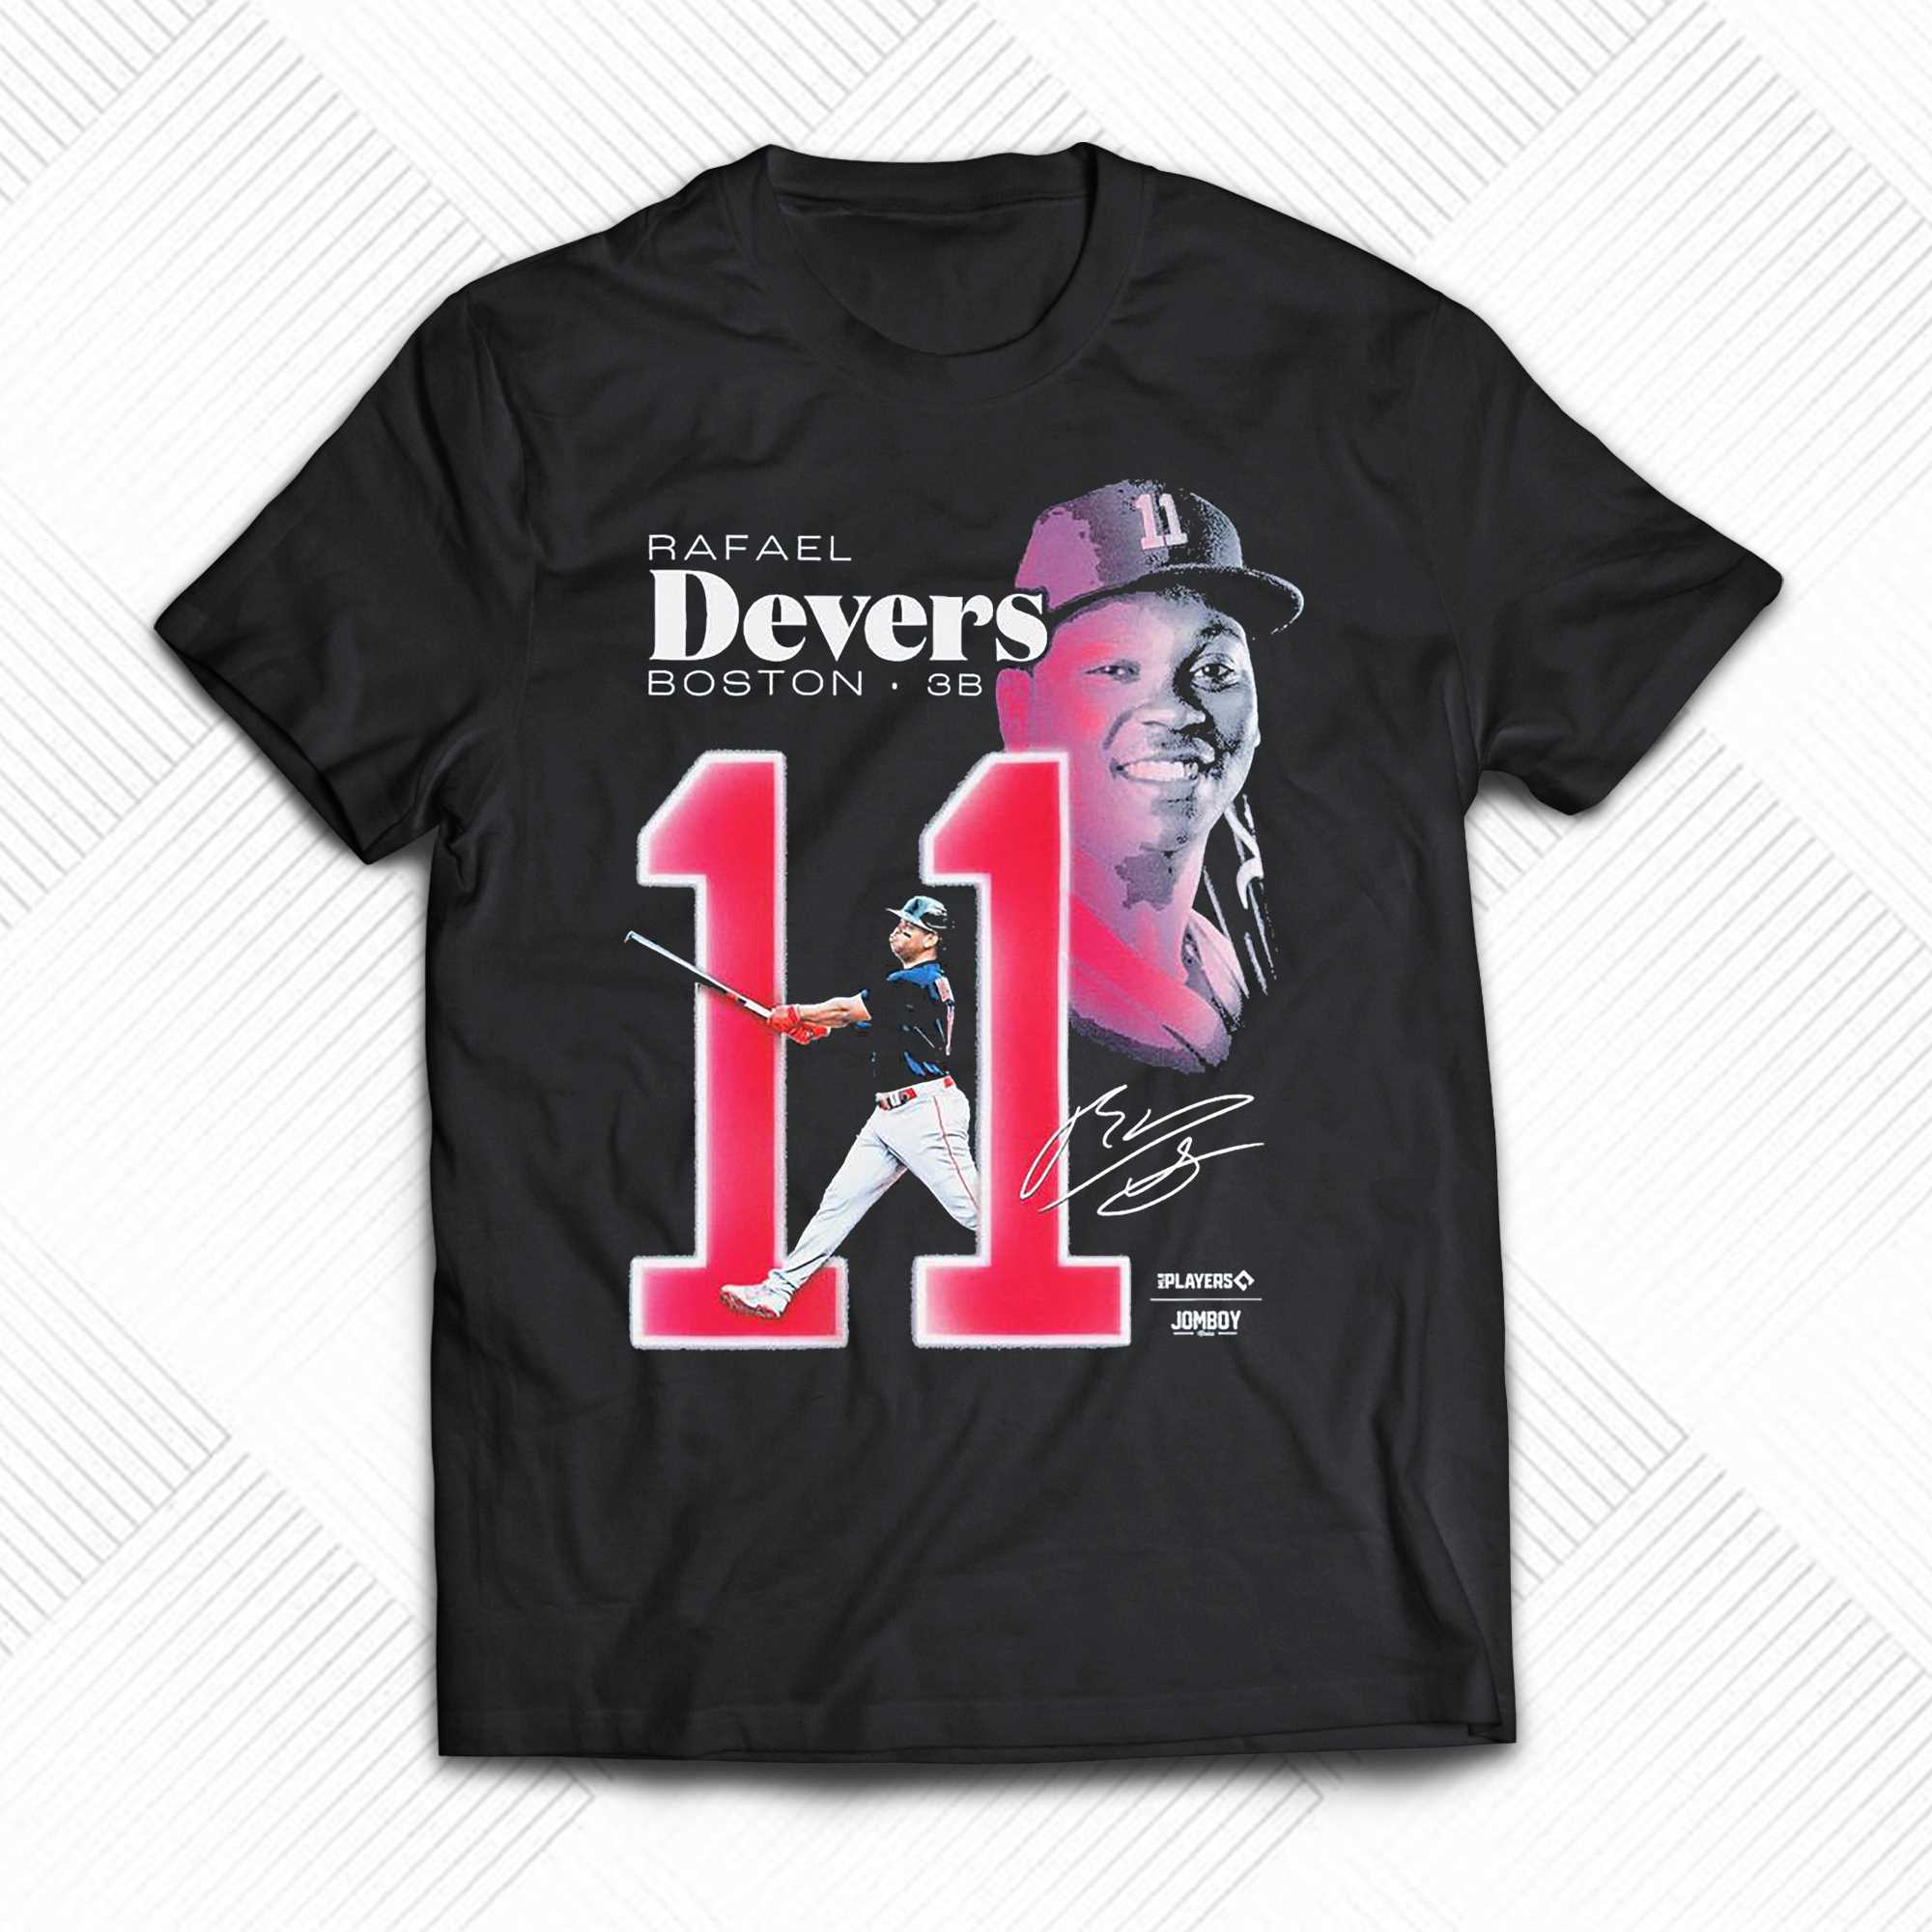 Rafael Devers Boston Red Sox 3b Signature Shirt - Shibtee Clothing